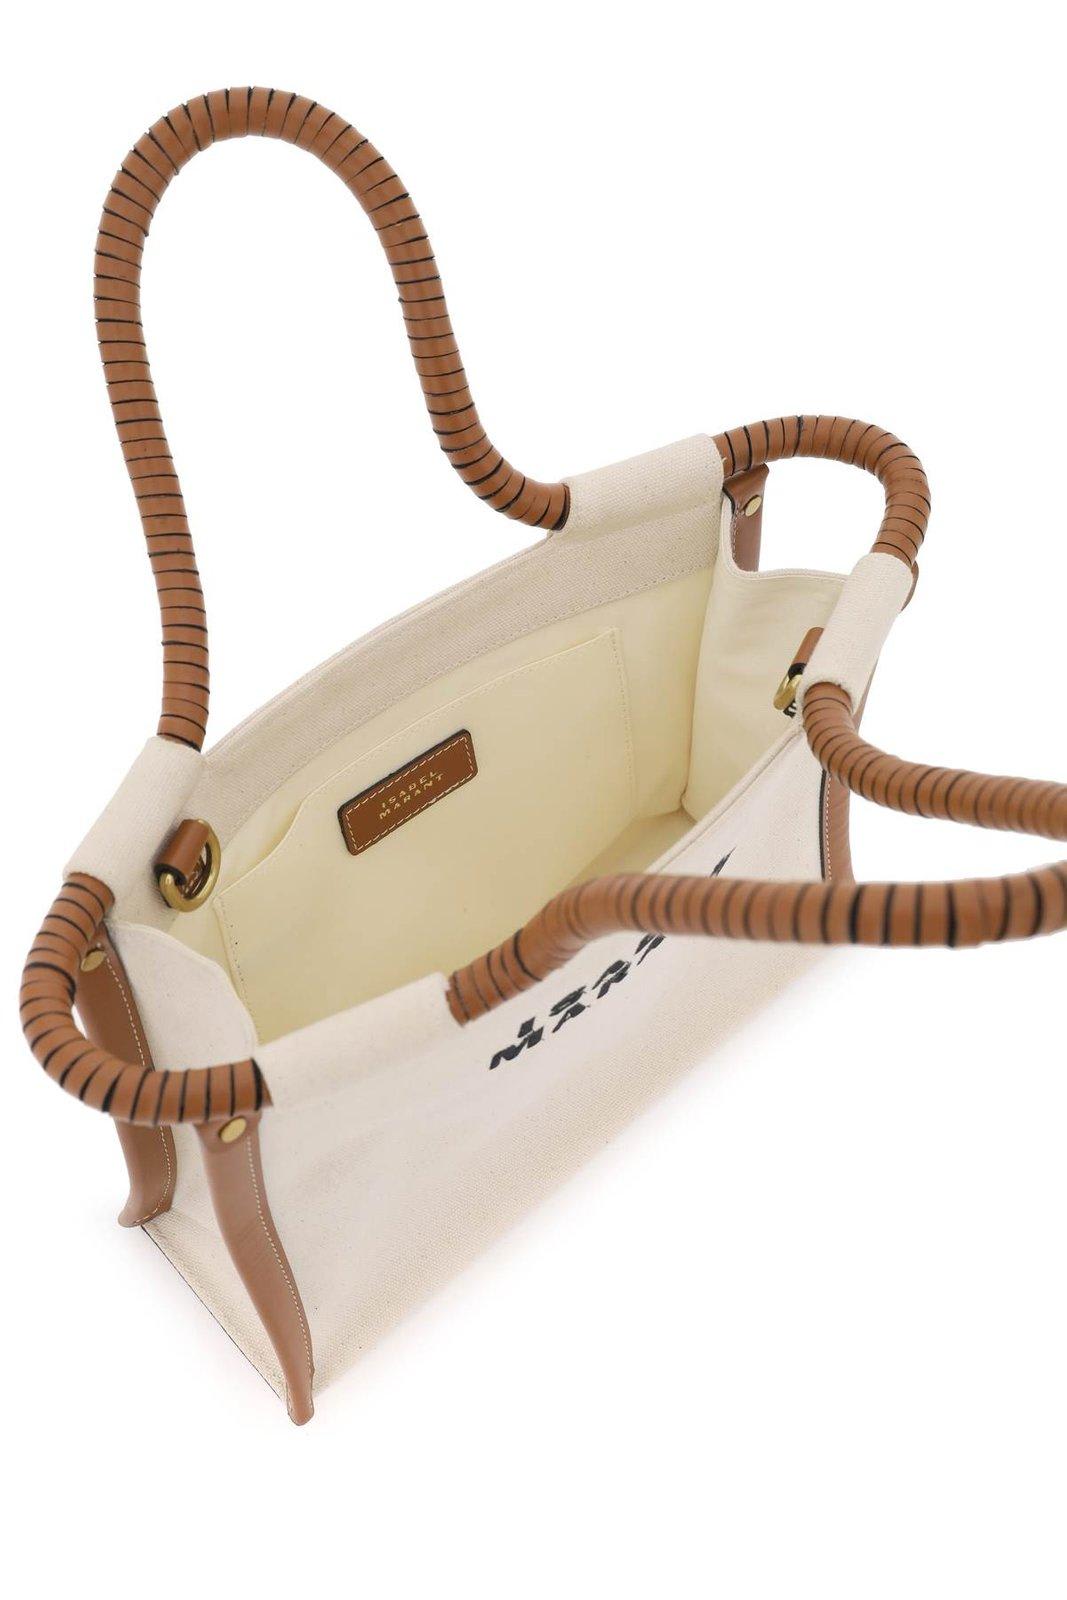 Shop Isabel Marant Toledo Small Top Handle Bag In Neutrals/brown